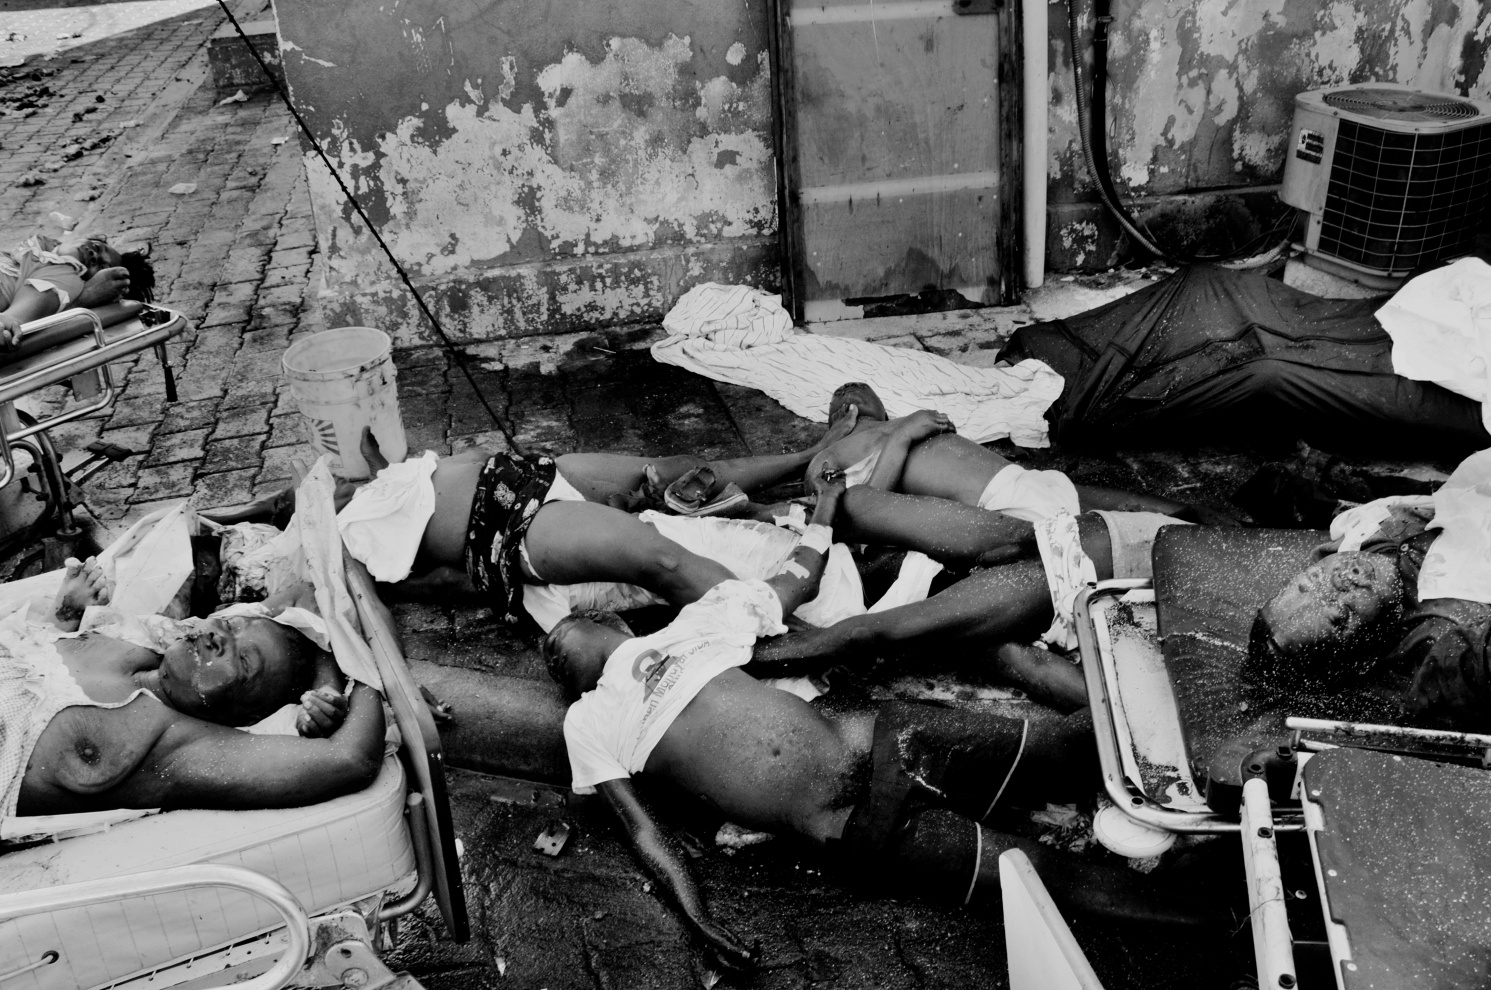 Haiti; Port au Prince; 2010

Bodies in decomposition near the Central Hospital.